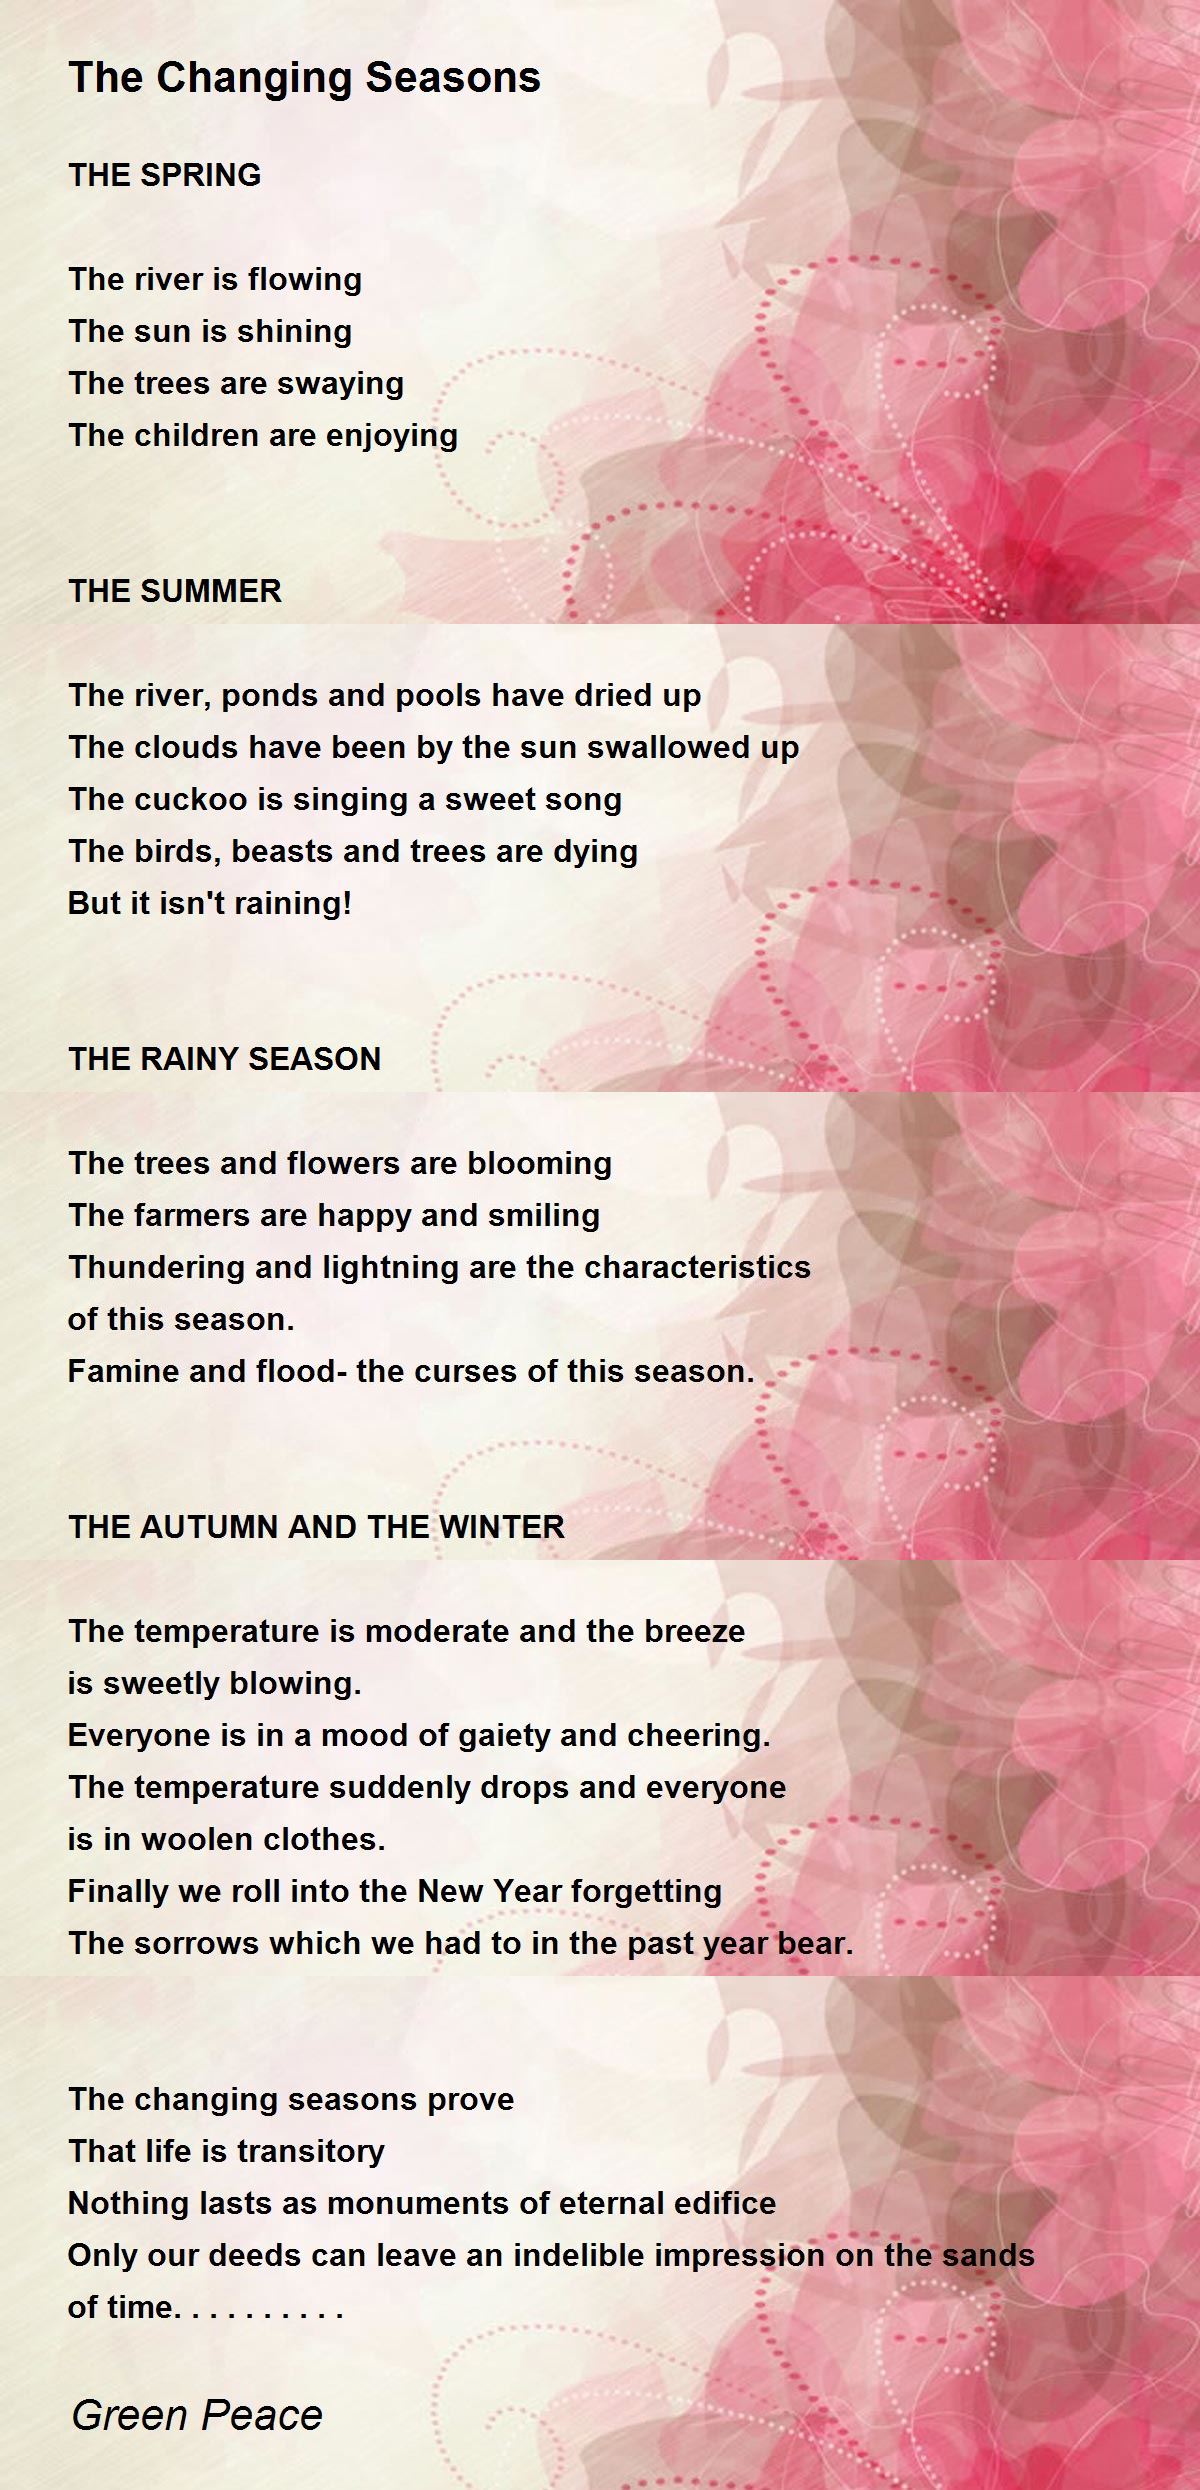 The Changing Seasons - The Changing Seasons Poem by Green Peace